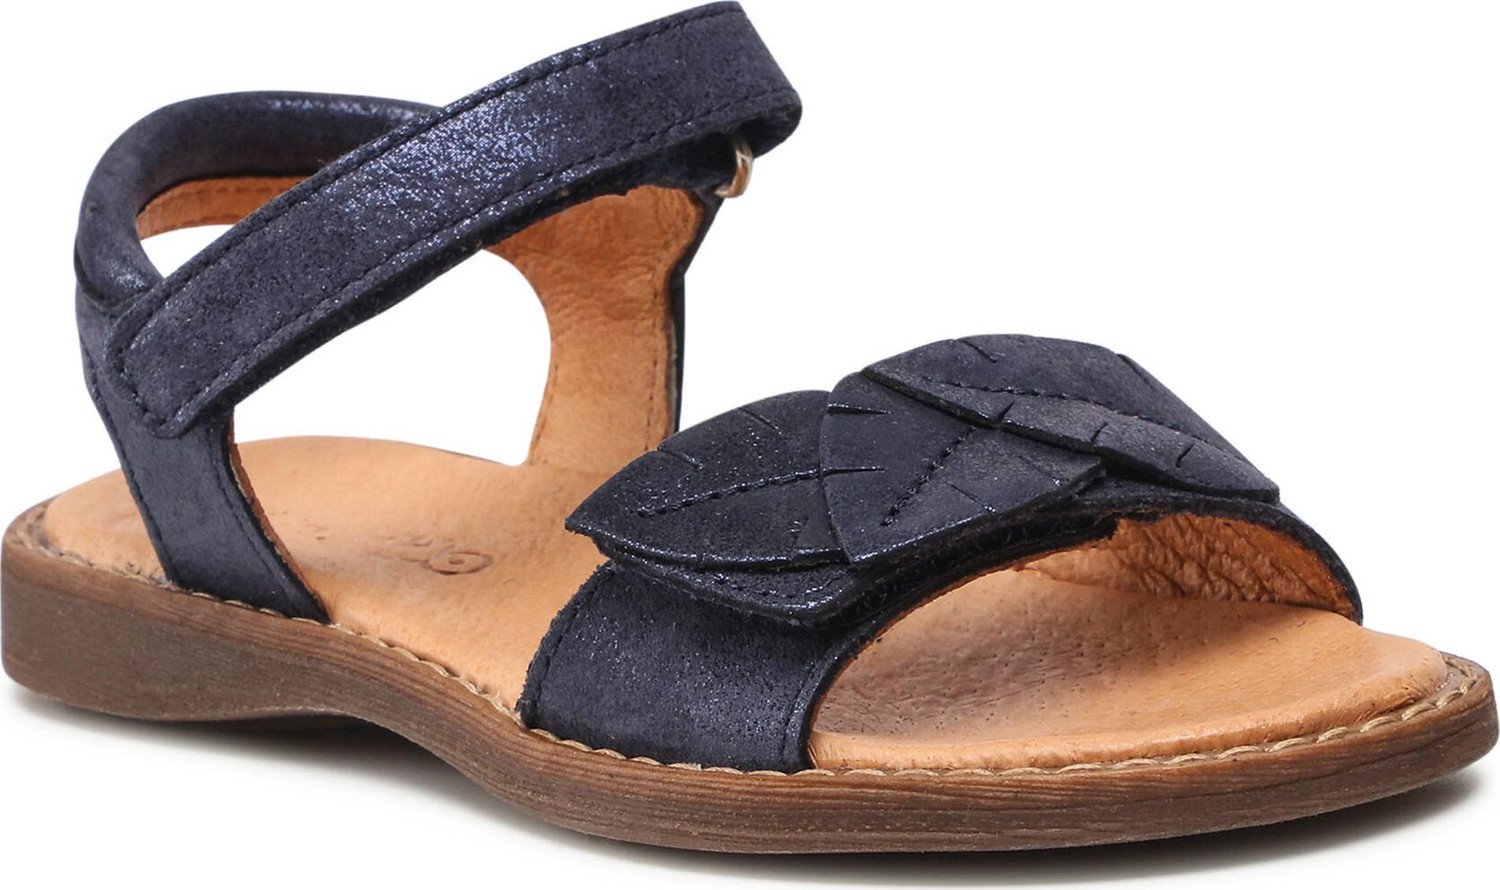 Sandály Froddo G3150205-3 Blue+